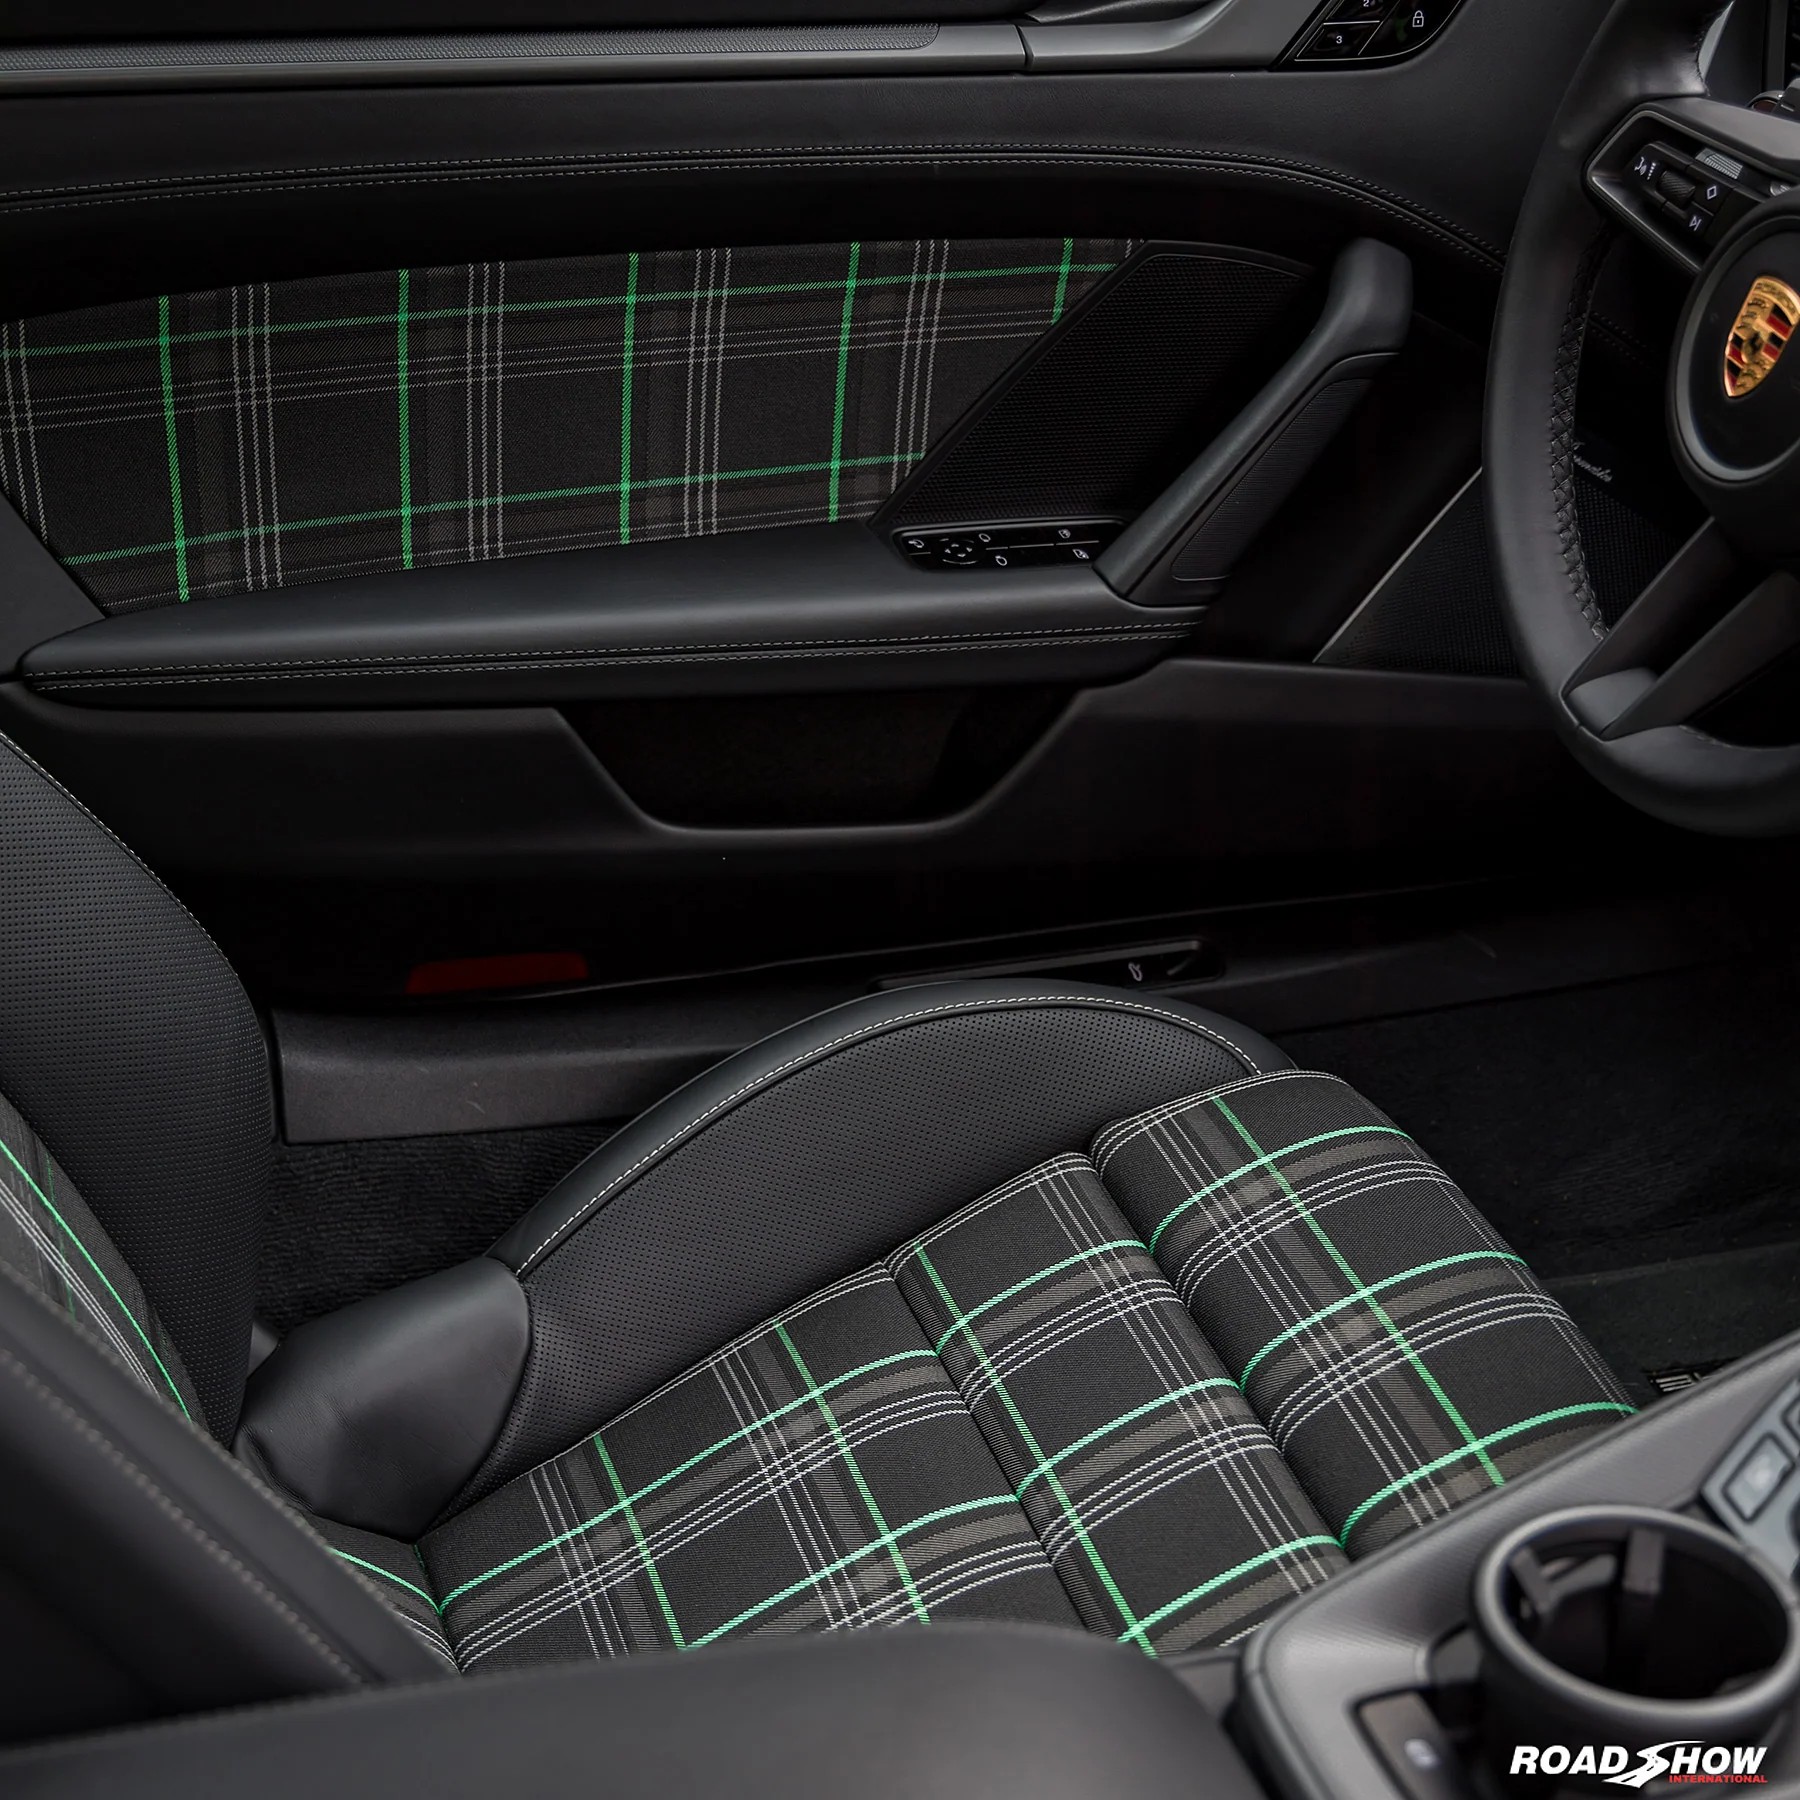 GTI Green Plaid Car Upholstery Fabric - VW Golf MK7- 3.5mm Comfort Foam - 59" - 150CM - Tartan Chic - Ideal for Seat, Interior, Automobile